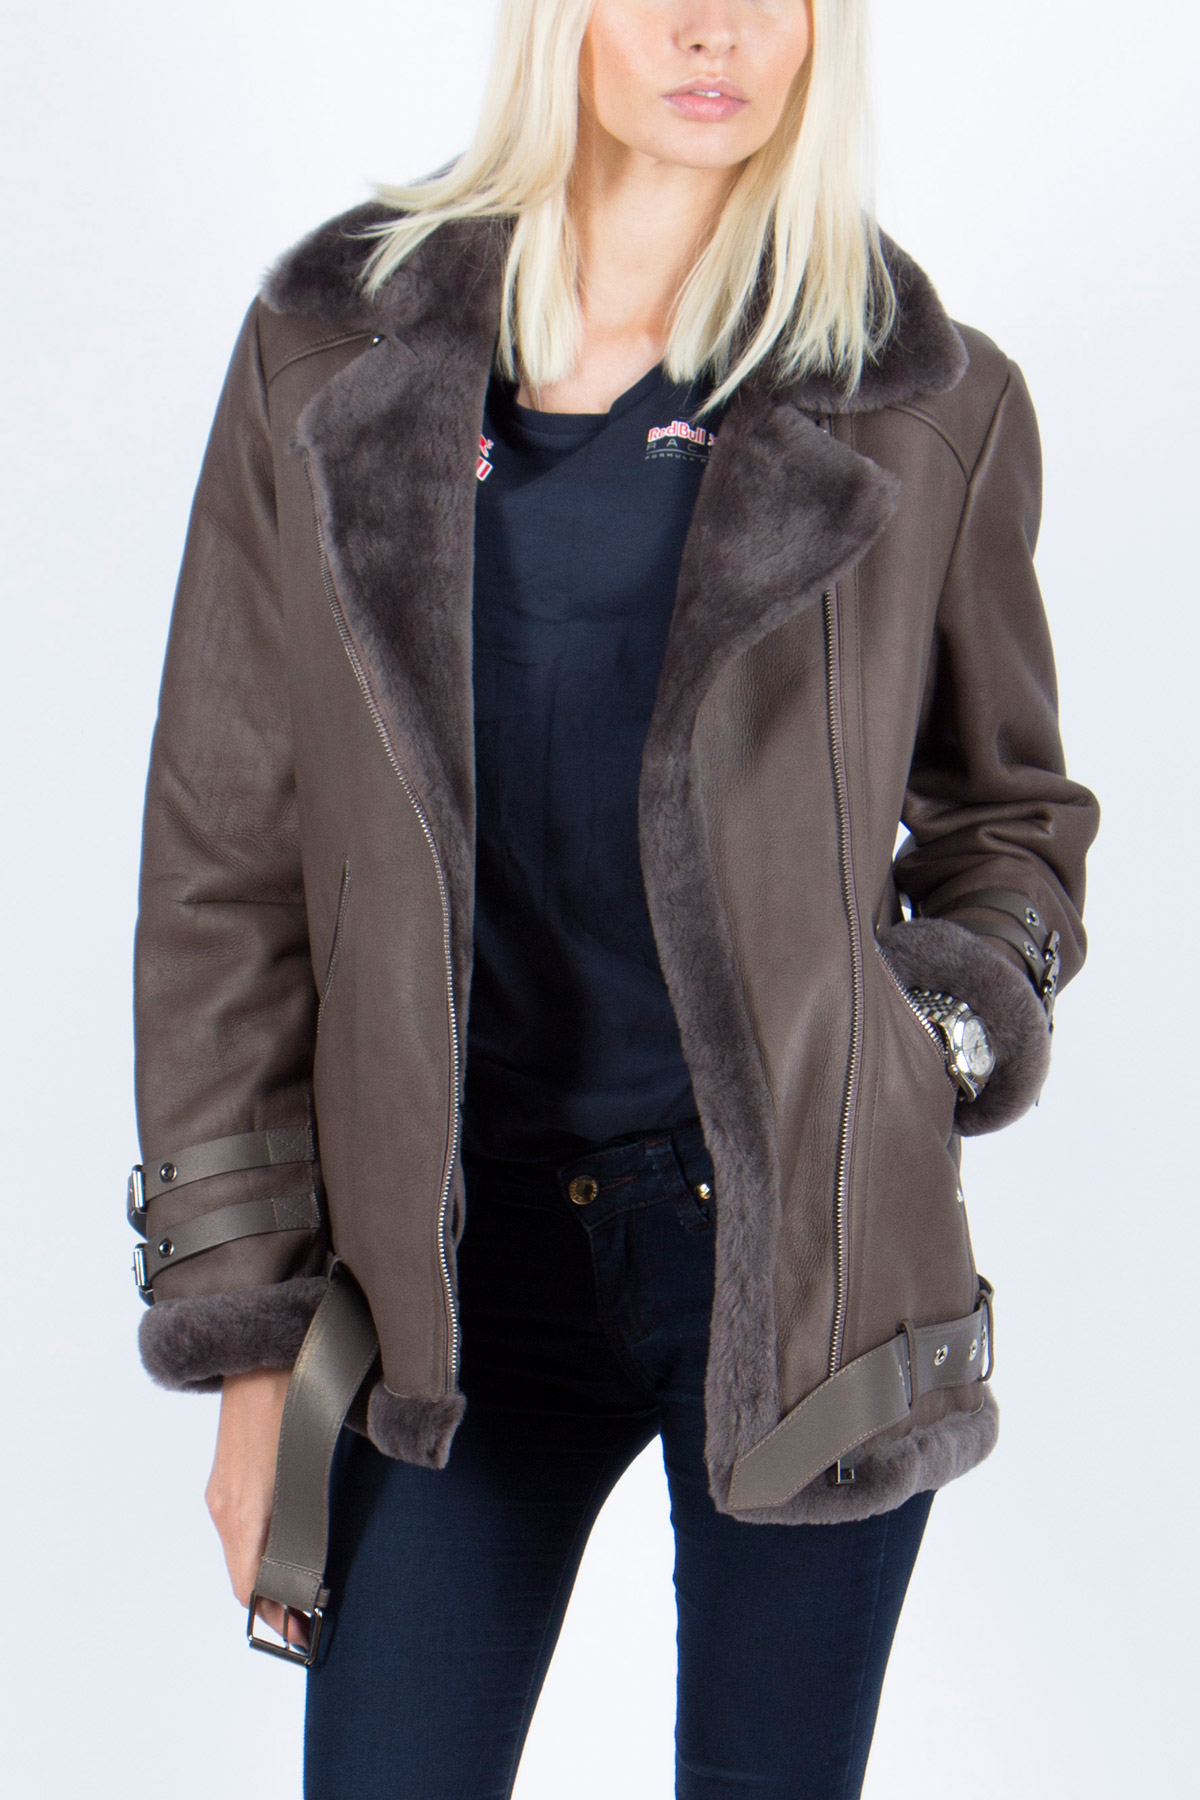 Ovini Leather fur дубленки модель 1101